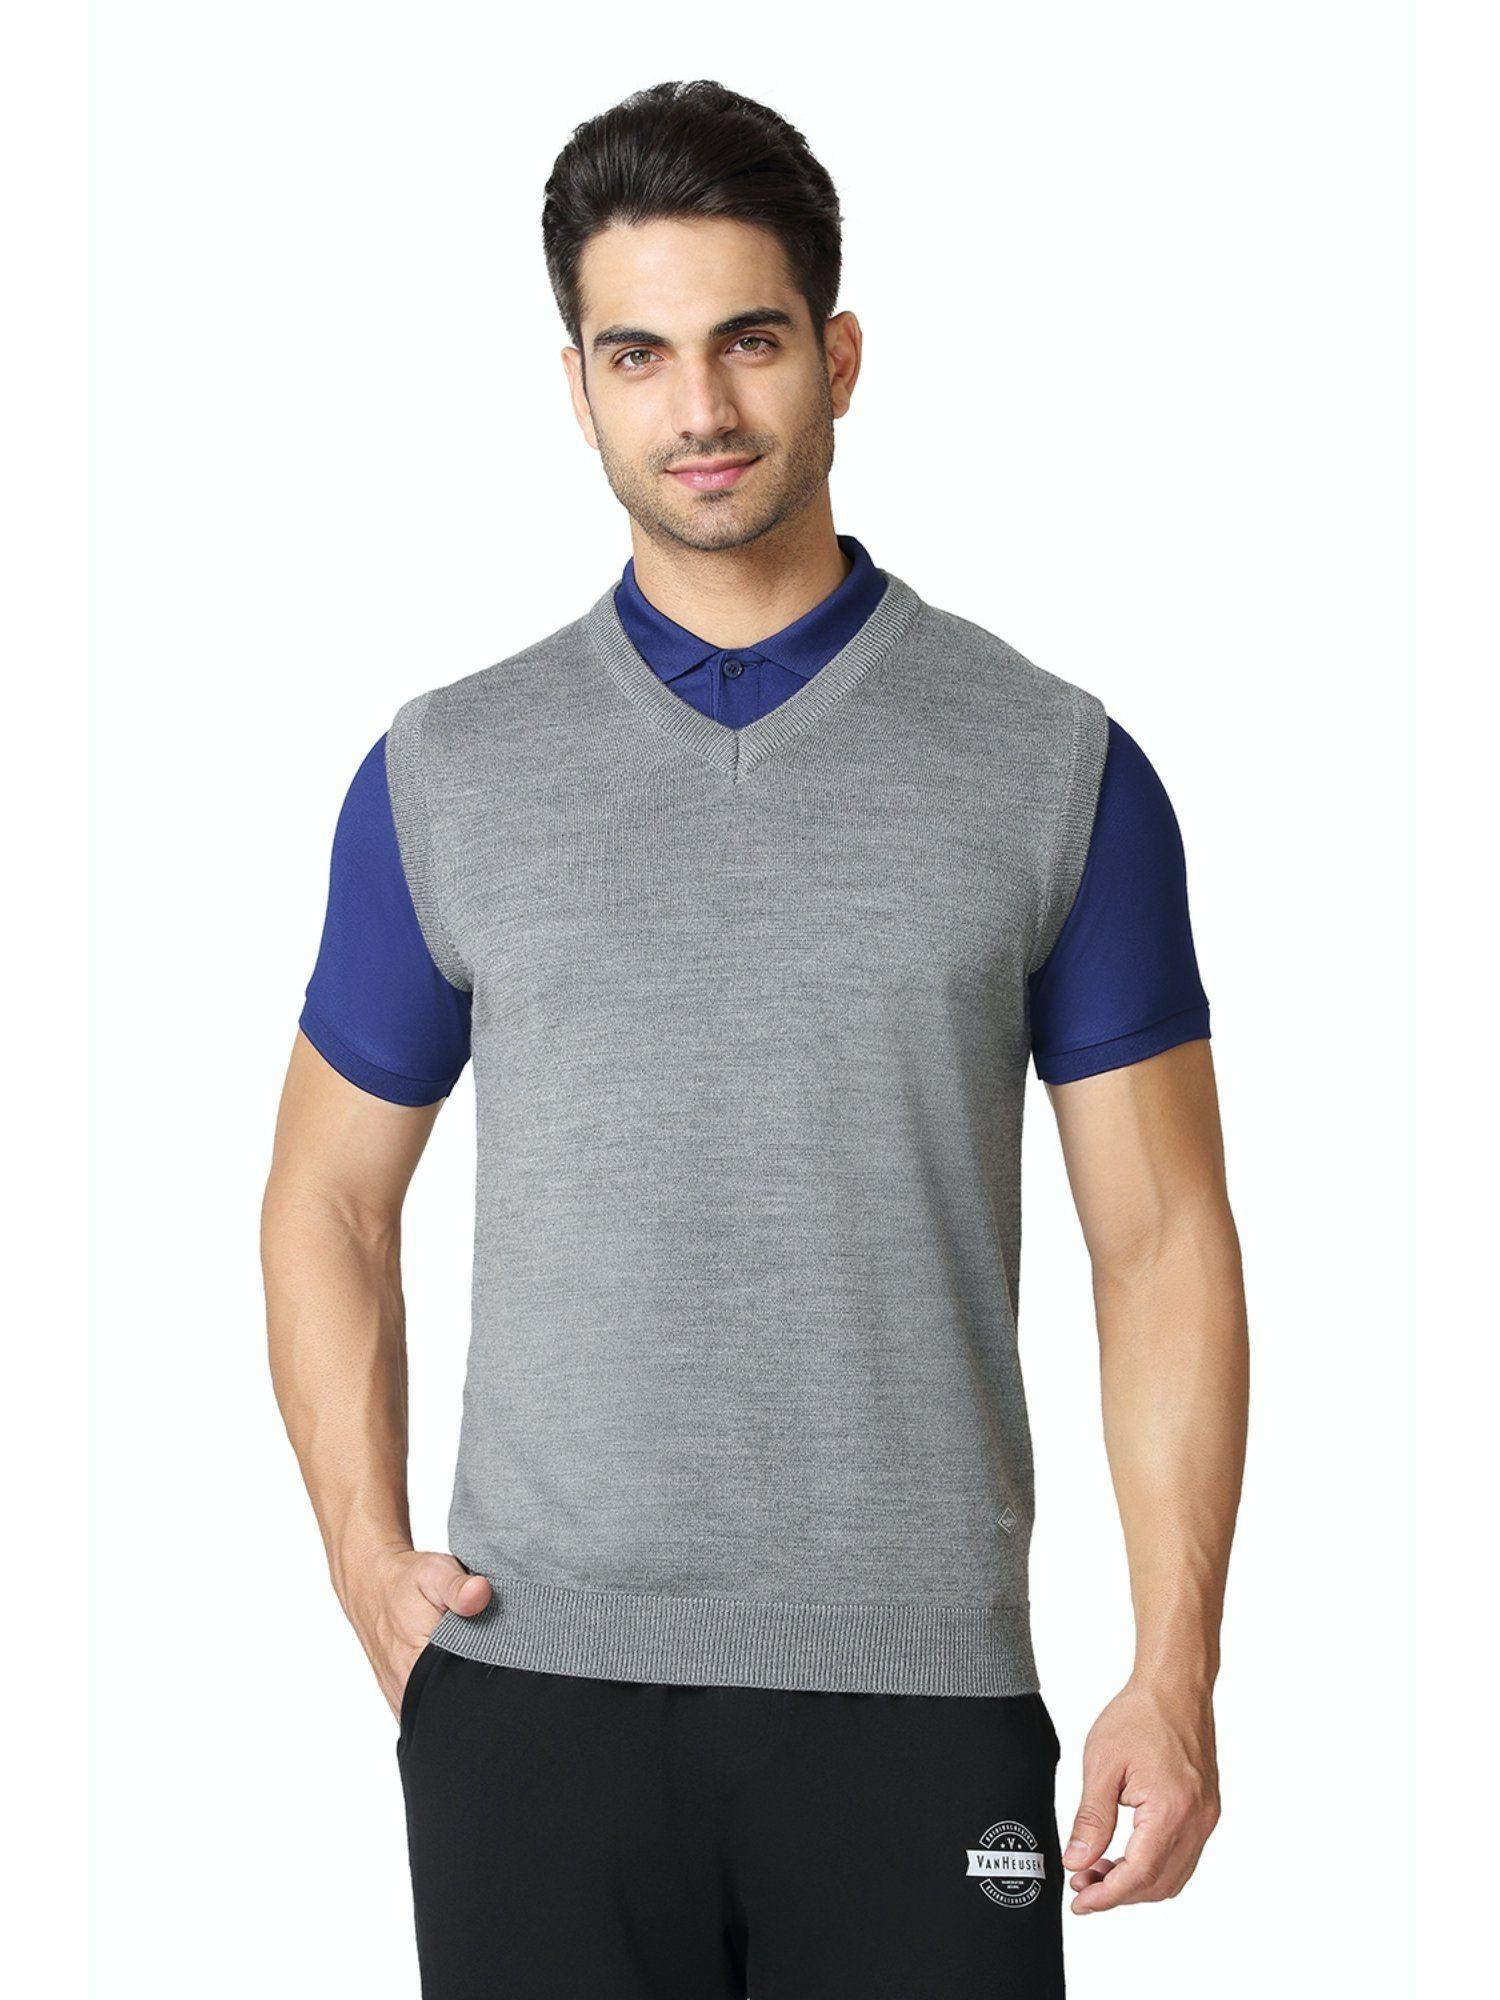 athleisure men v-neck & sleeveless sweater - grey melange